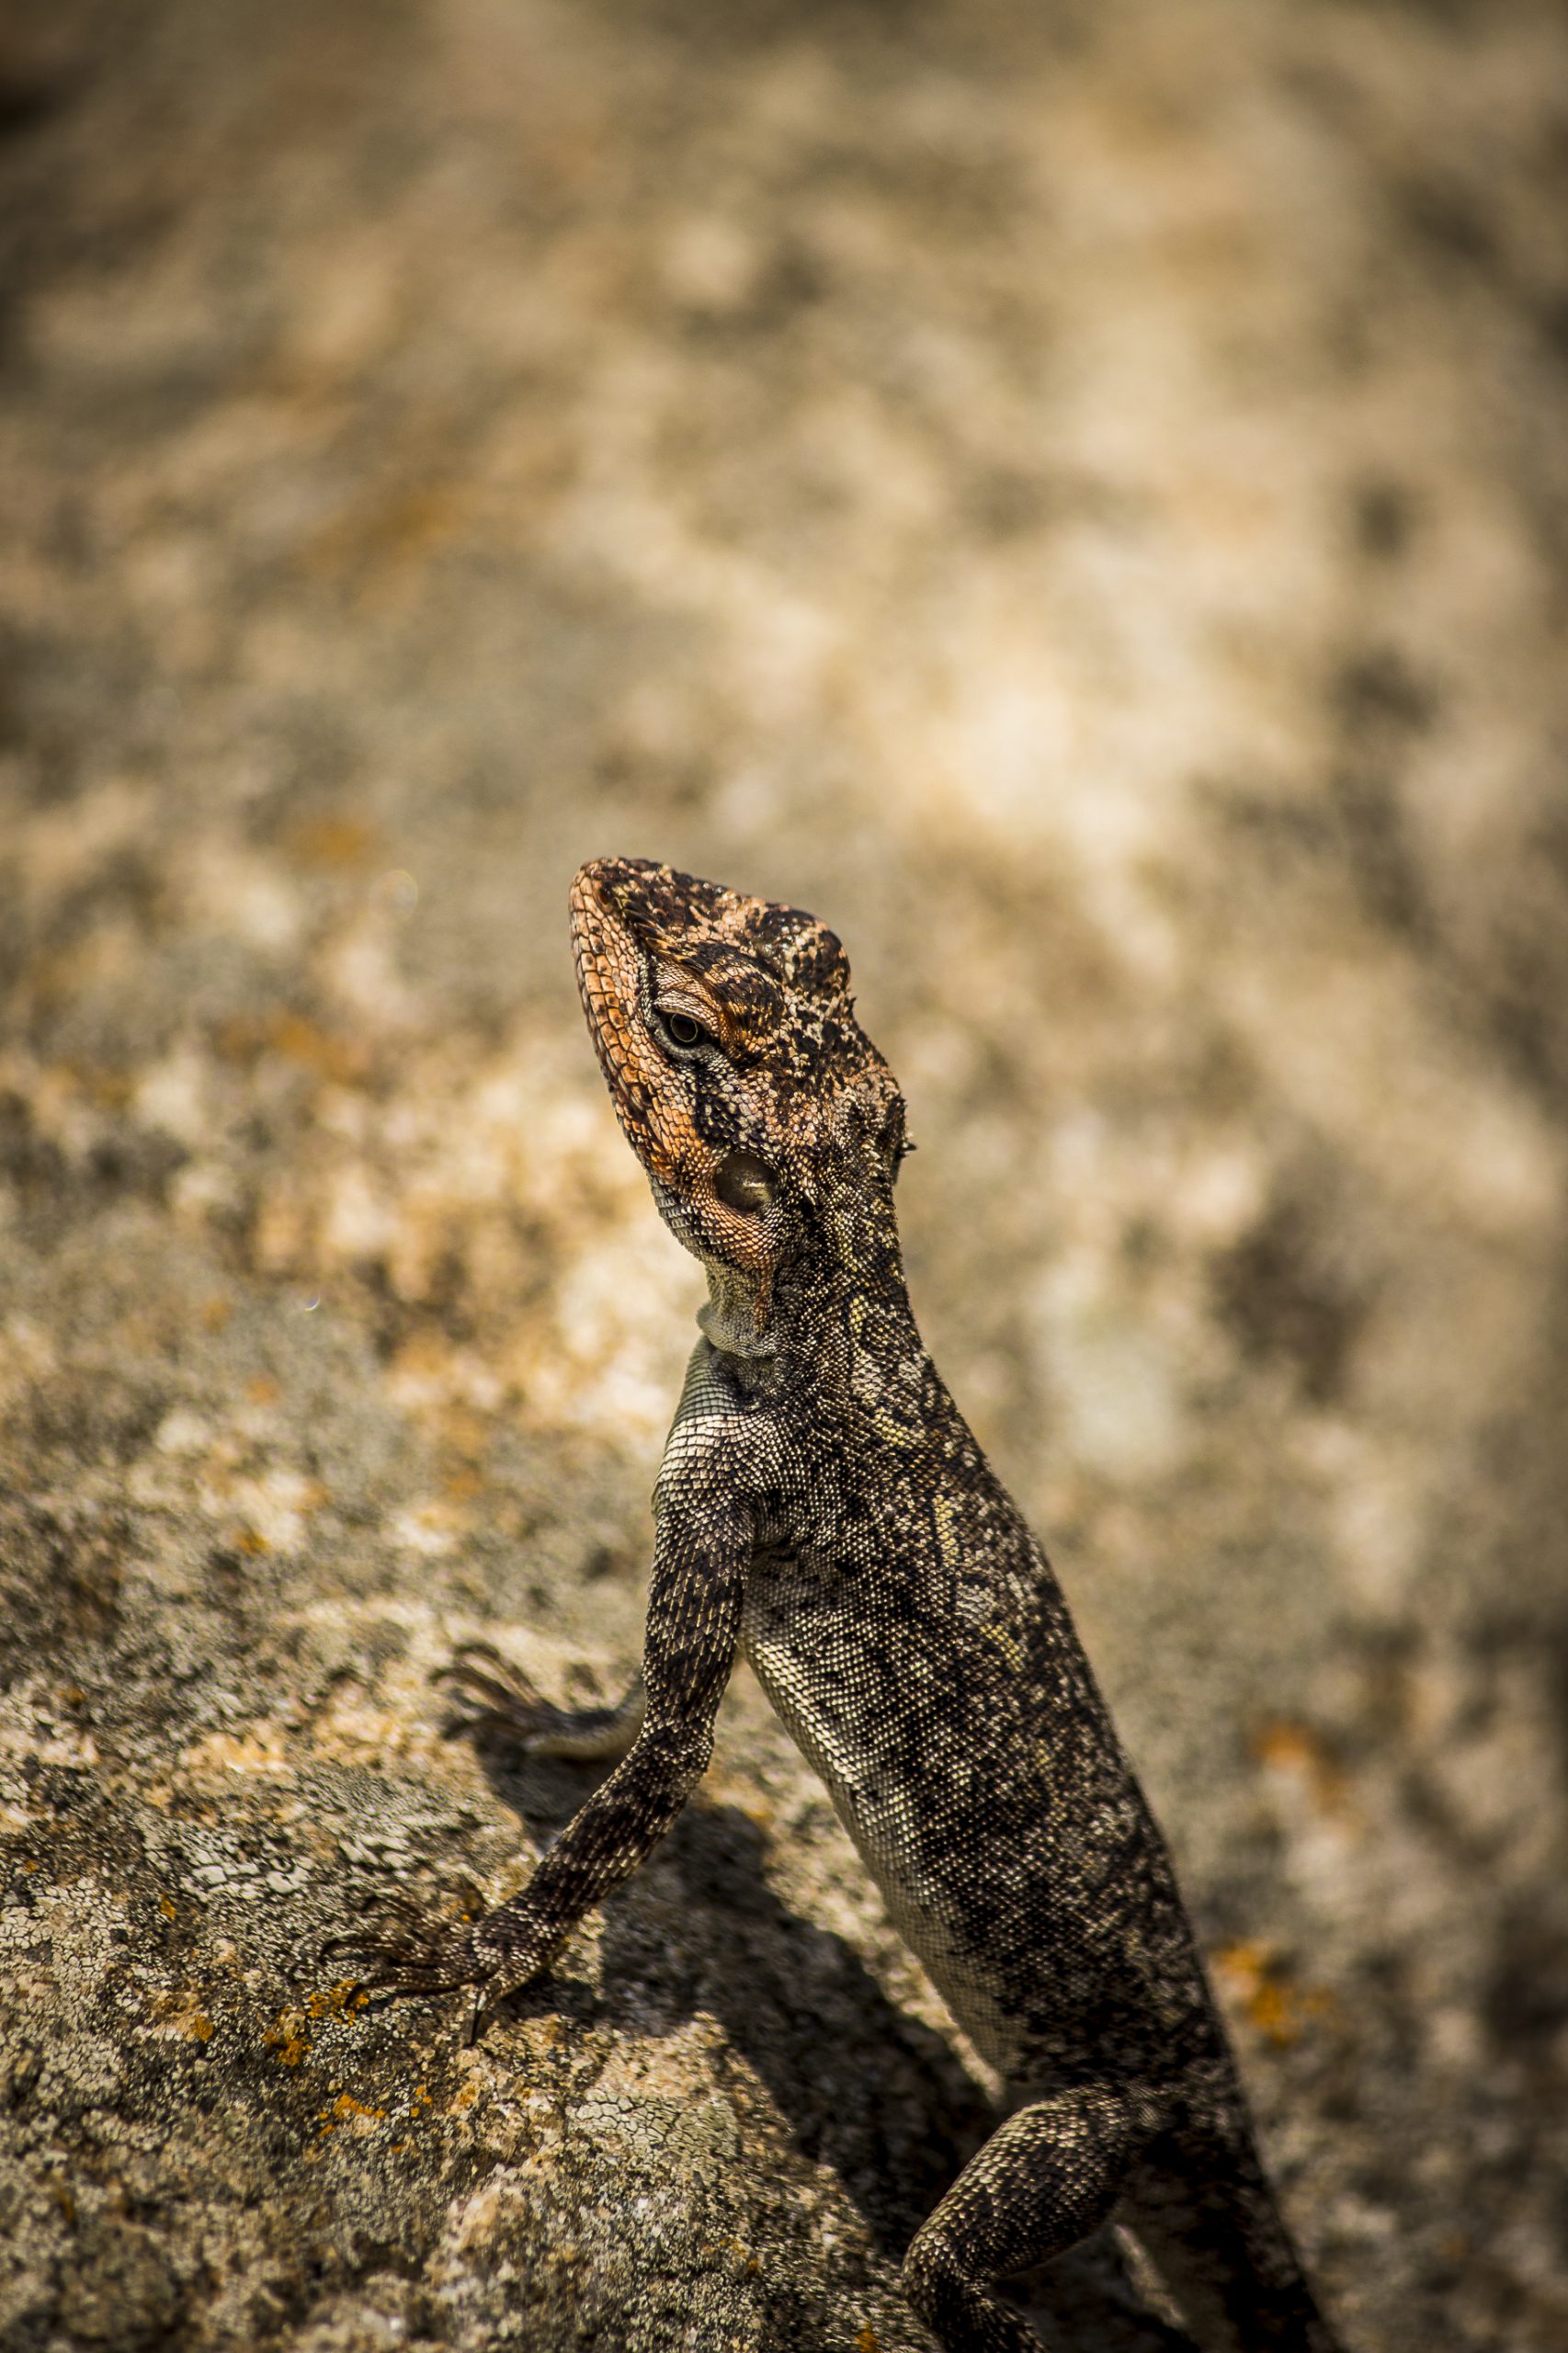 Garden lizard on rock